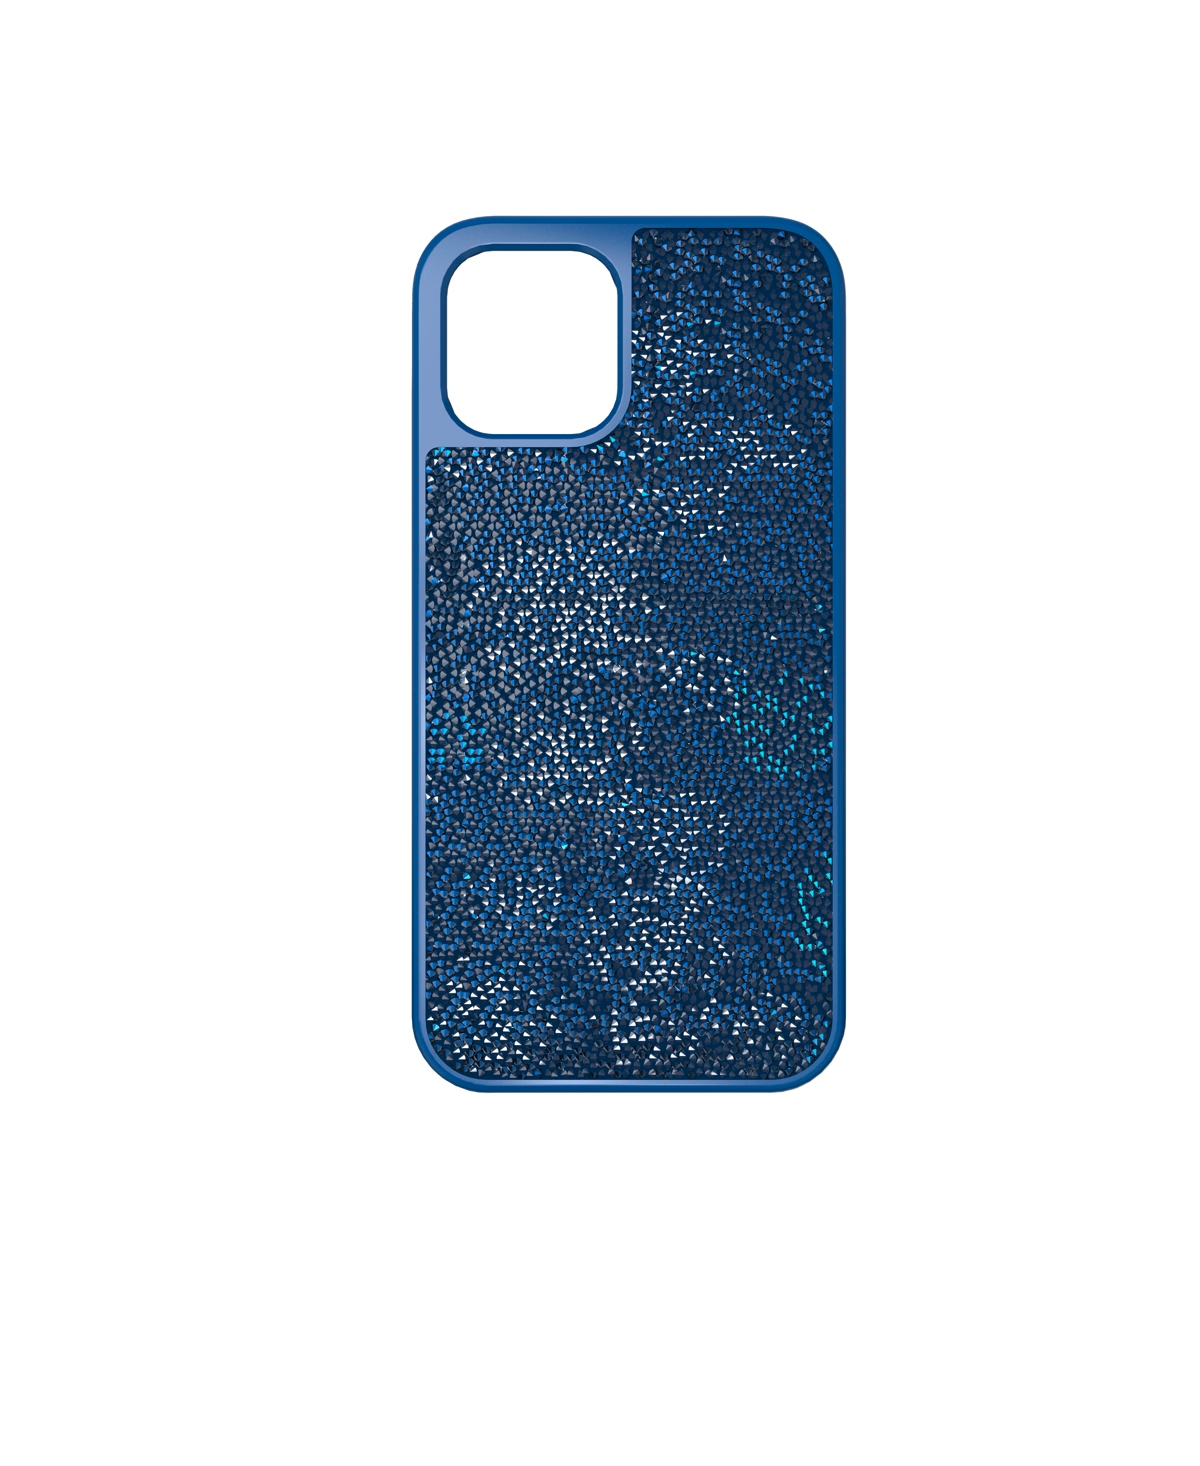 Swarovski Glam Rock Iphone 12 Pro Max Smartphone Case In Blue